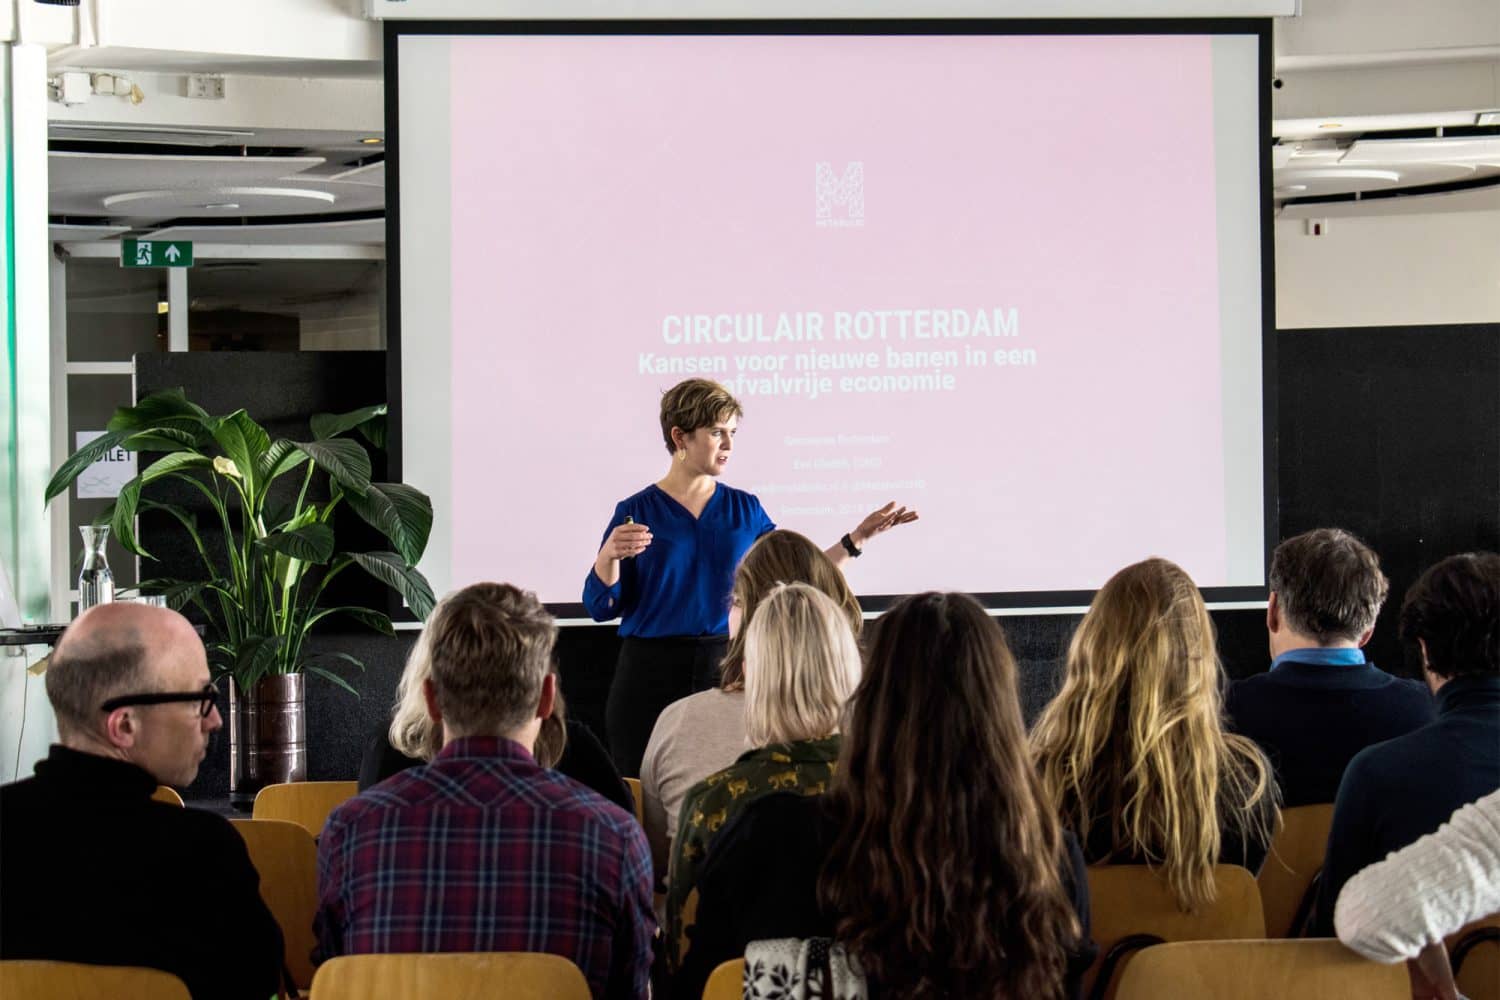 Metabolic CEO Eva Gladek presenting the Circular Rotterdam proposal.